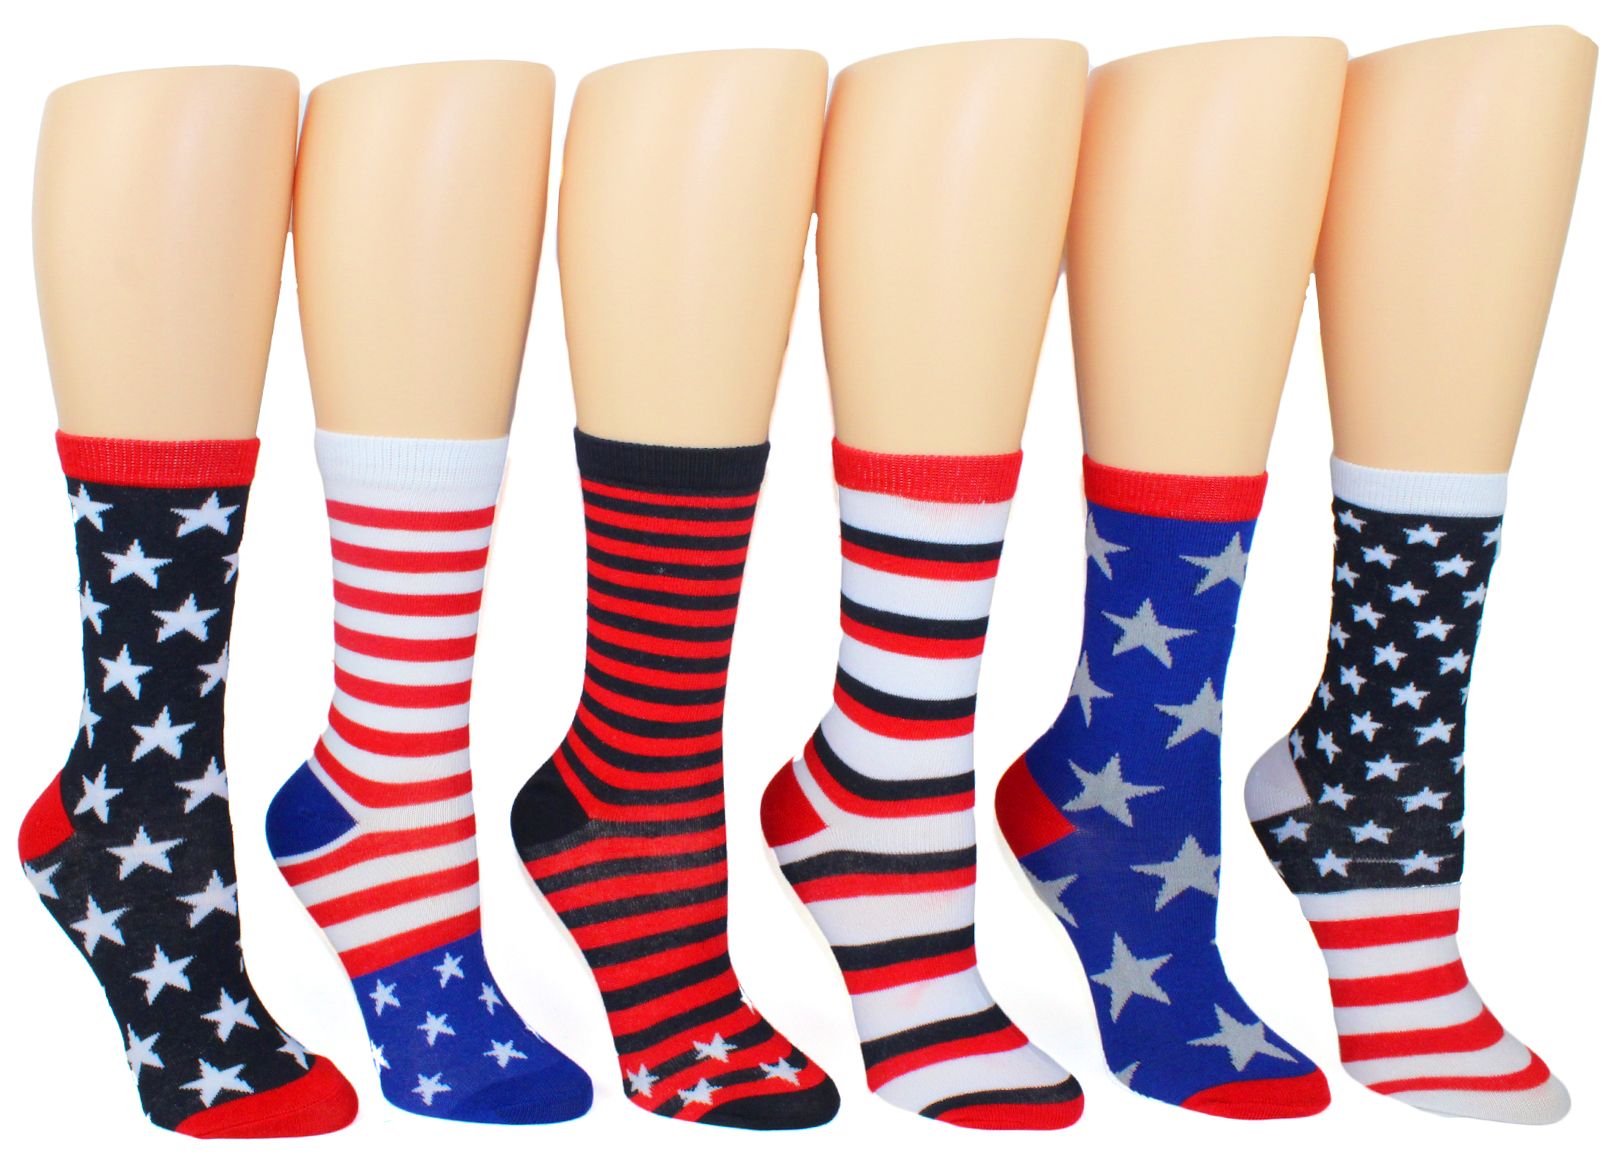 Women's Novelty Crew Socks - American FLAG Prints - Size 9-11